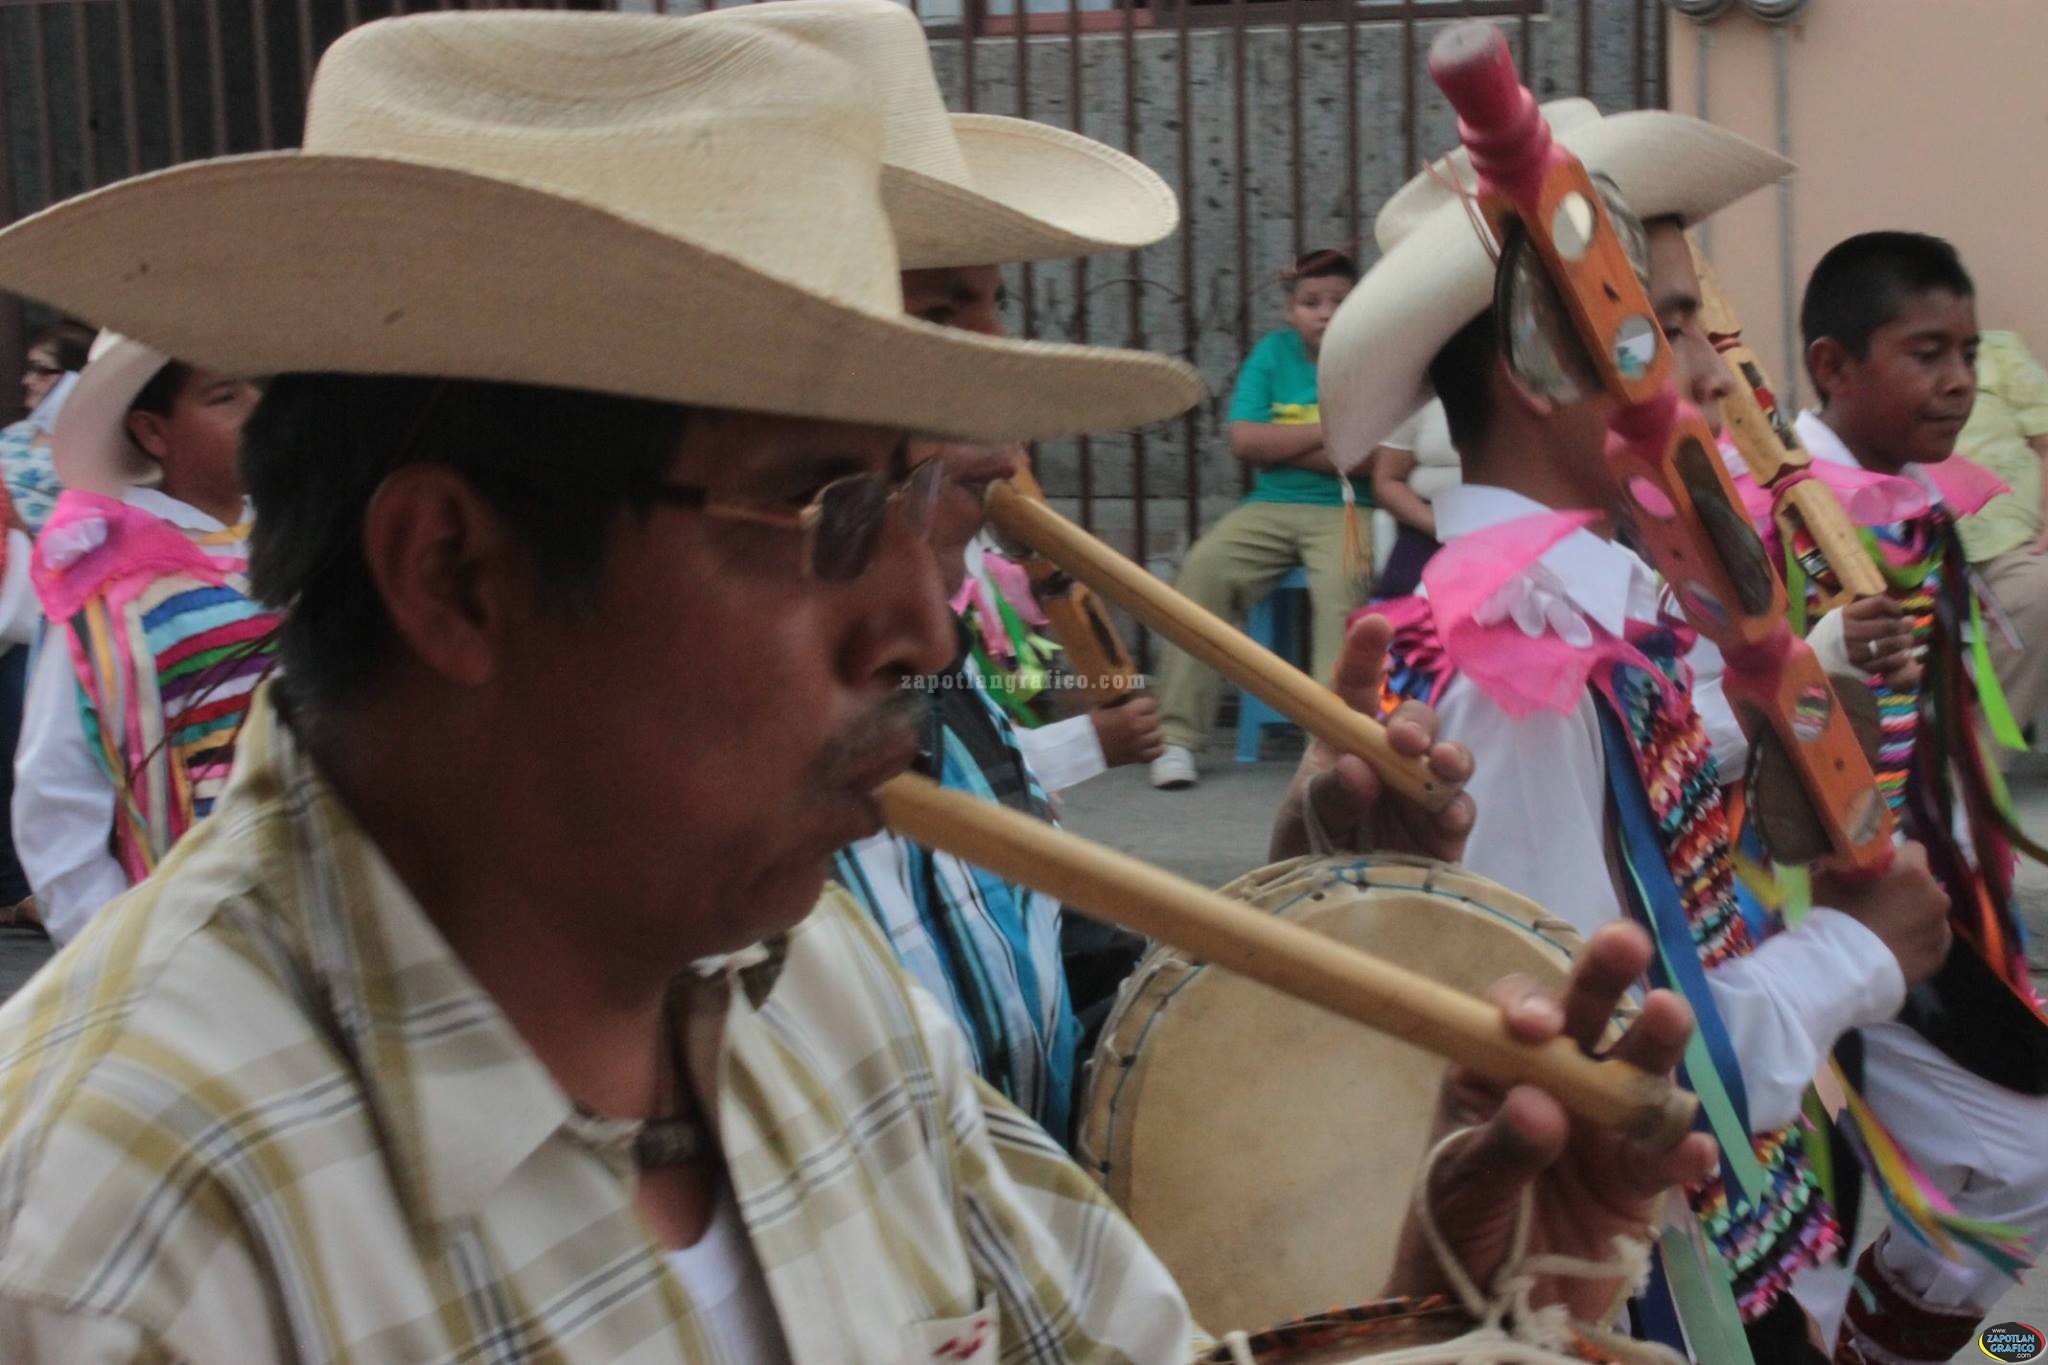 Anuncian Festividad 2015 en Honor del Señor del Perdón en Tuxpan, Jal.